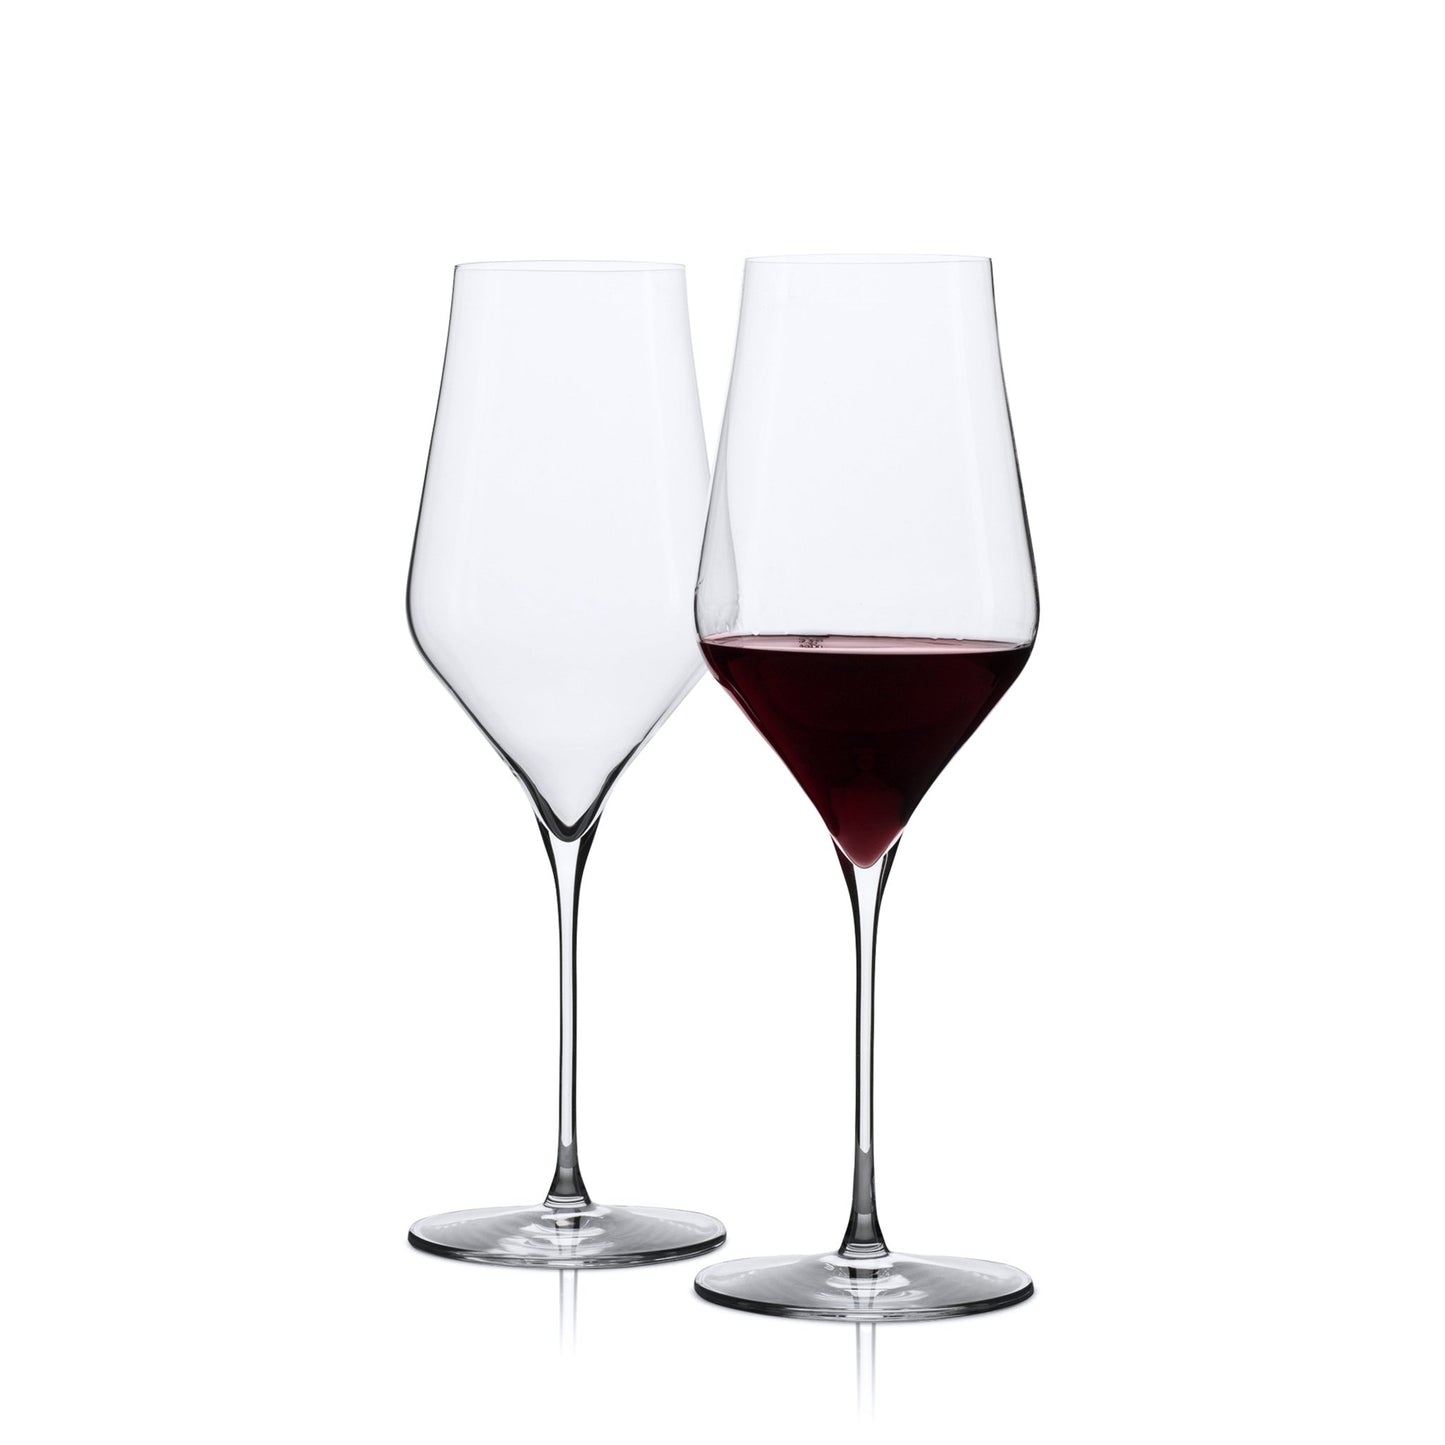 Wine Glasses. 'Duke'. (520ml) 4x Glasses - Anders & White